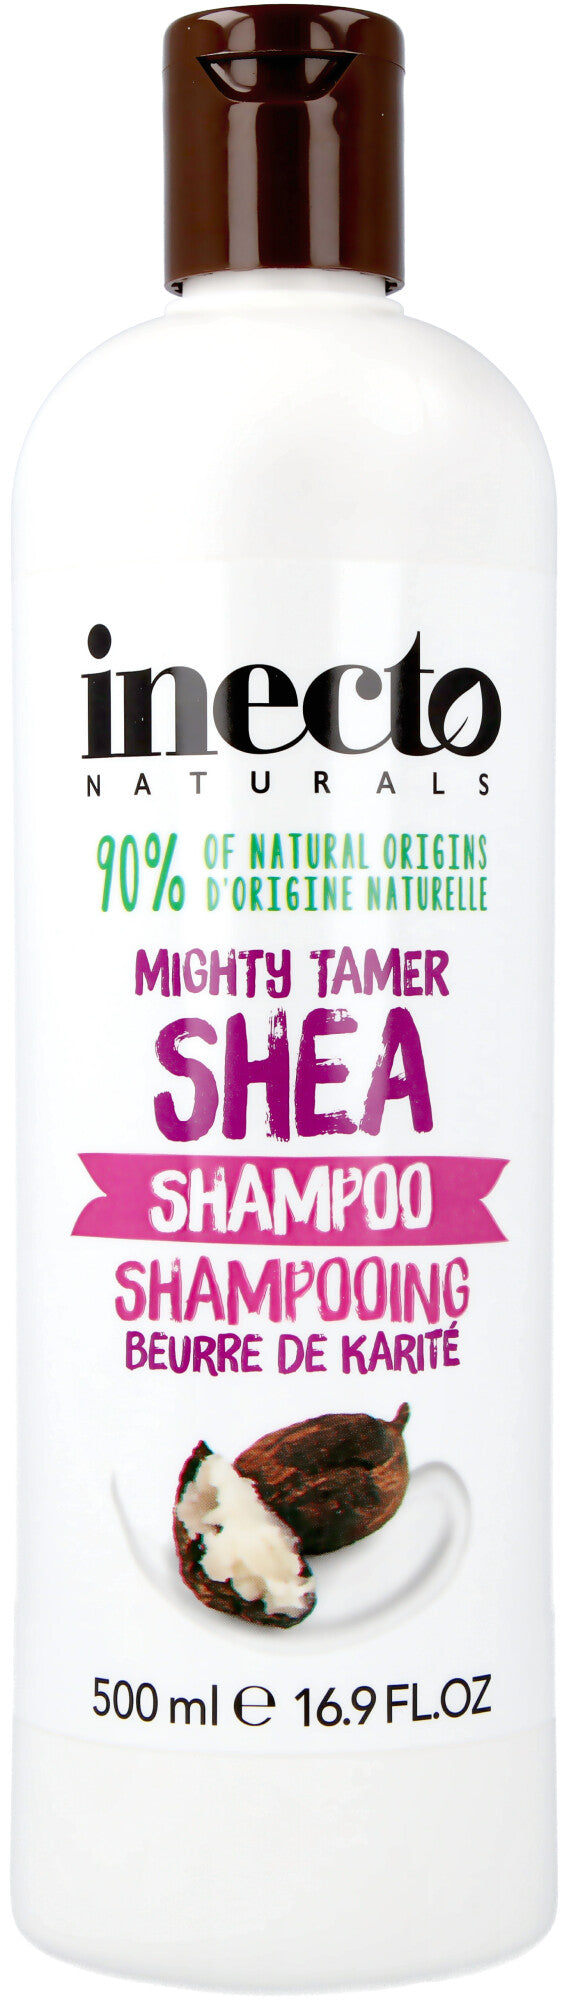 Inecto Naturals Shampoo Manteiga Karité 500ml - Crisdietética